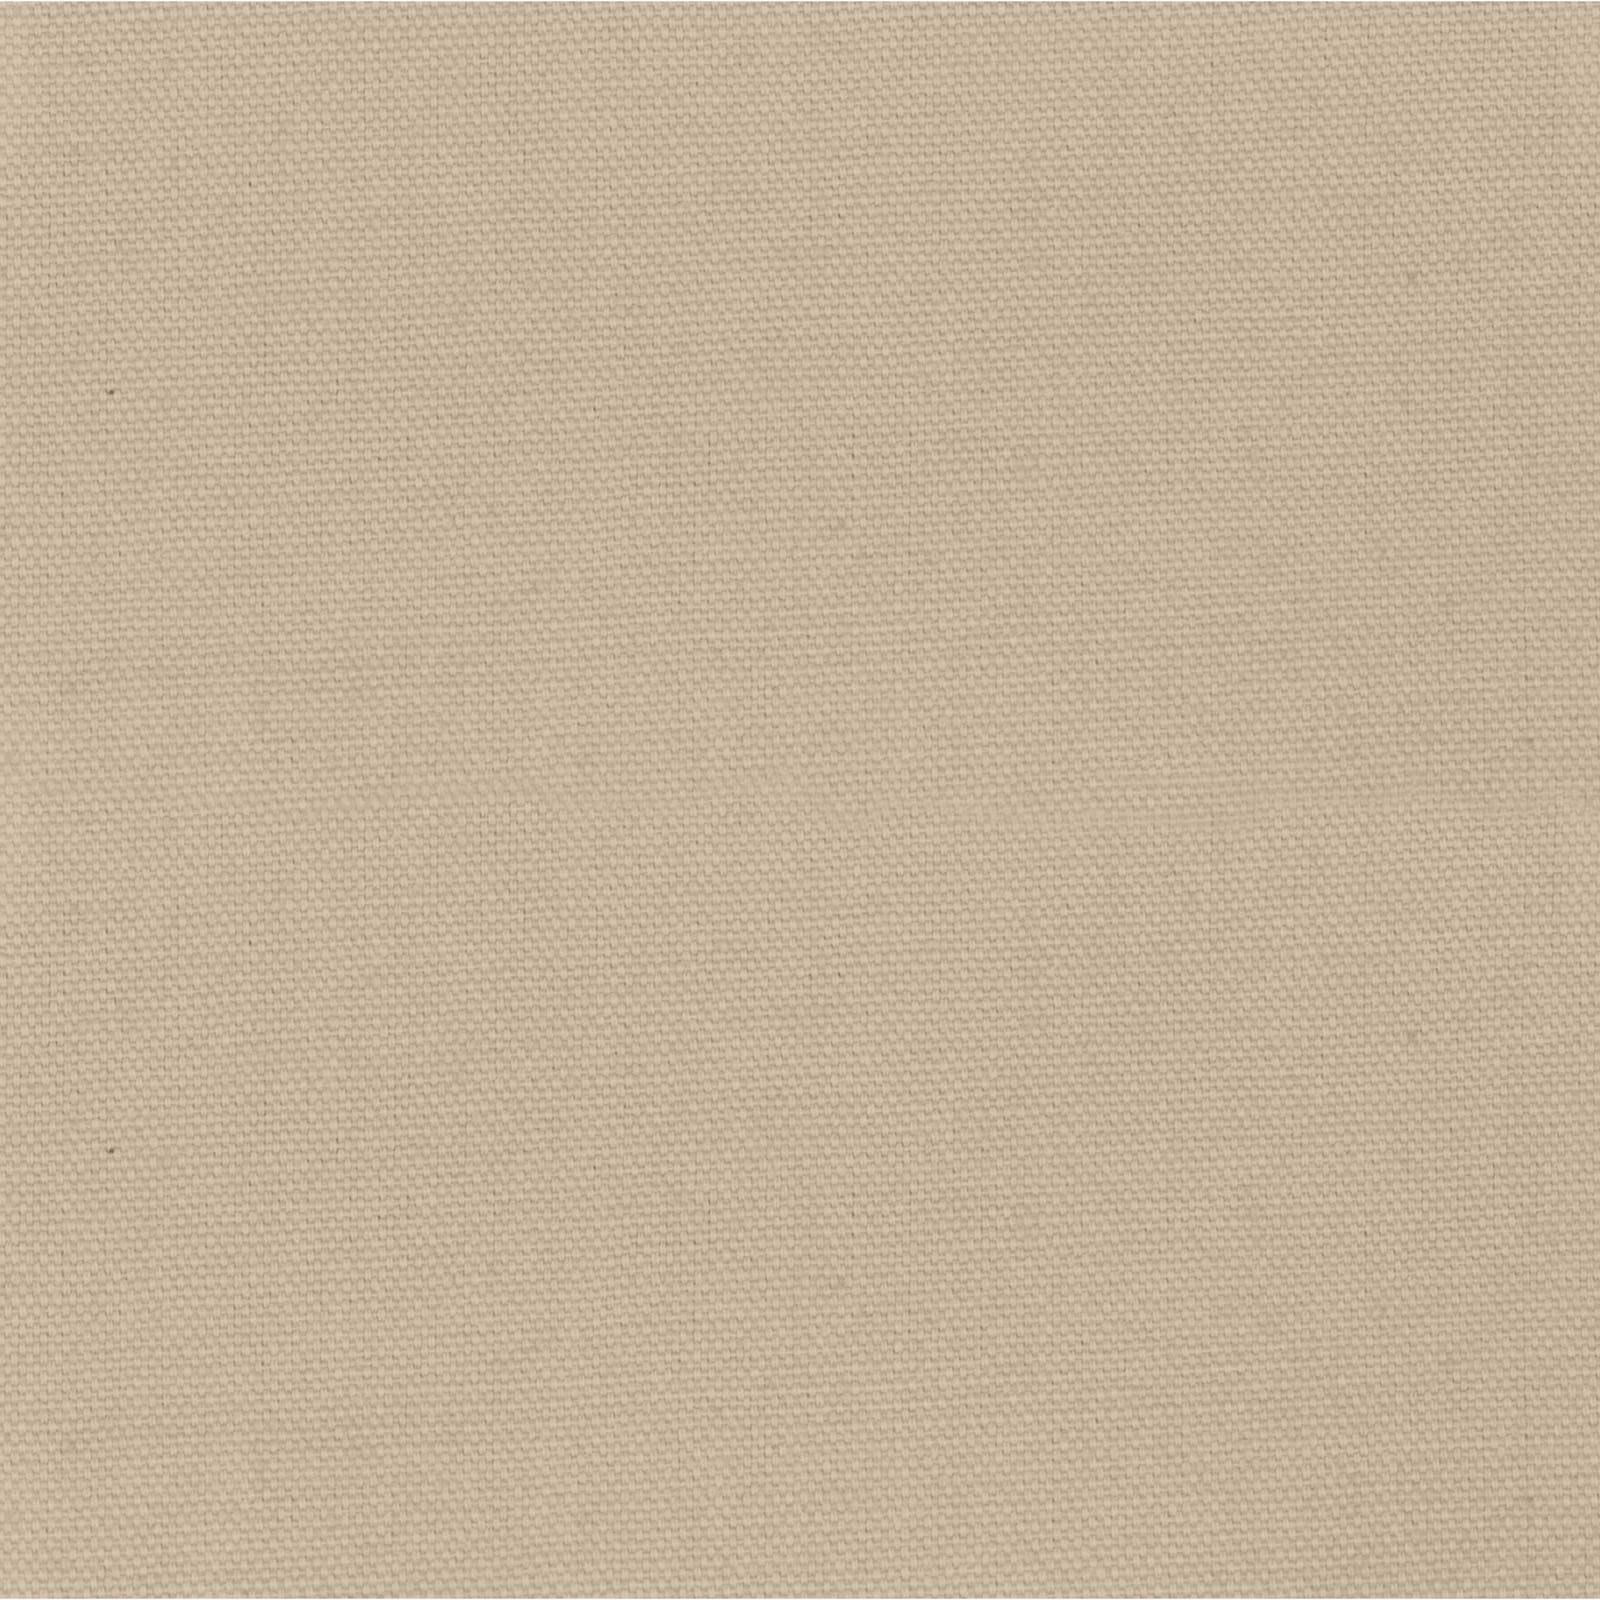 10 oz Cotton Duck Canvas Fabric